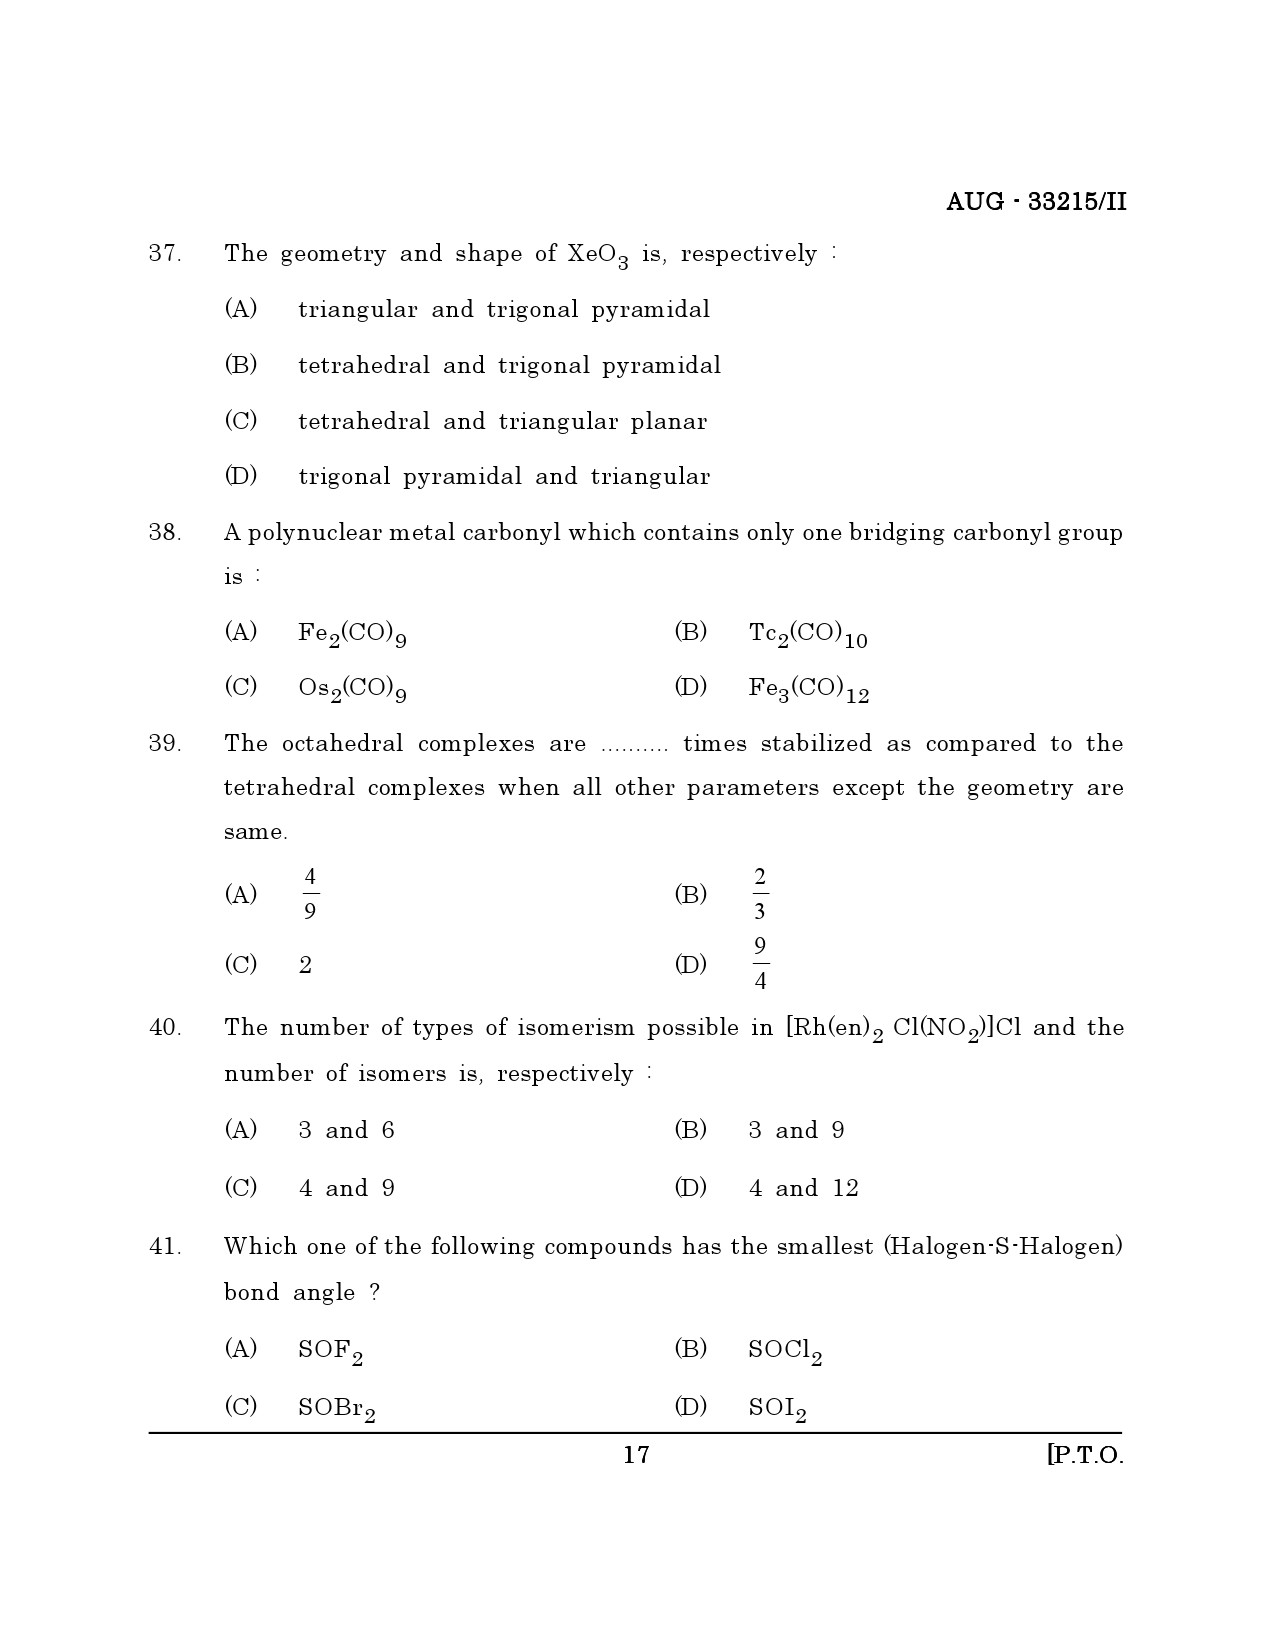 Maharashtra SET Chemical Sciences Question Paper II August 2015 16